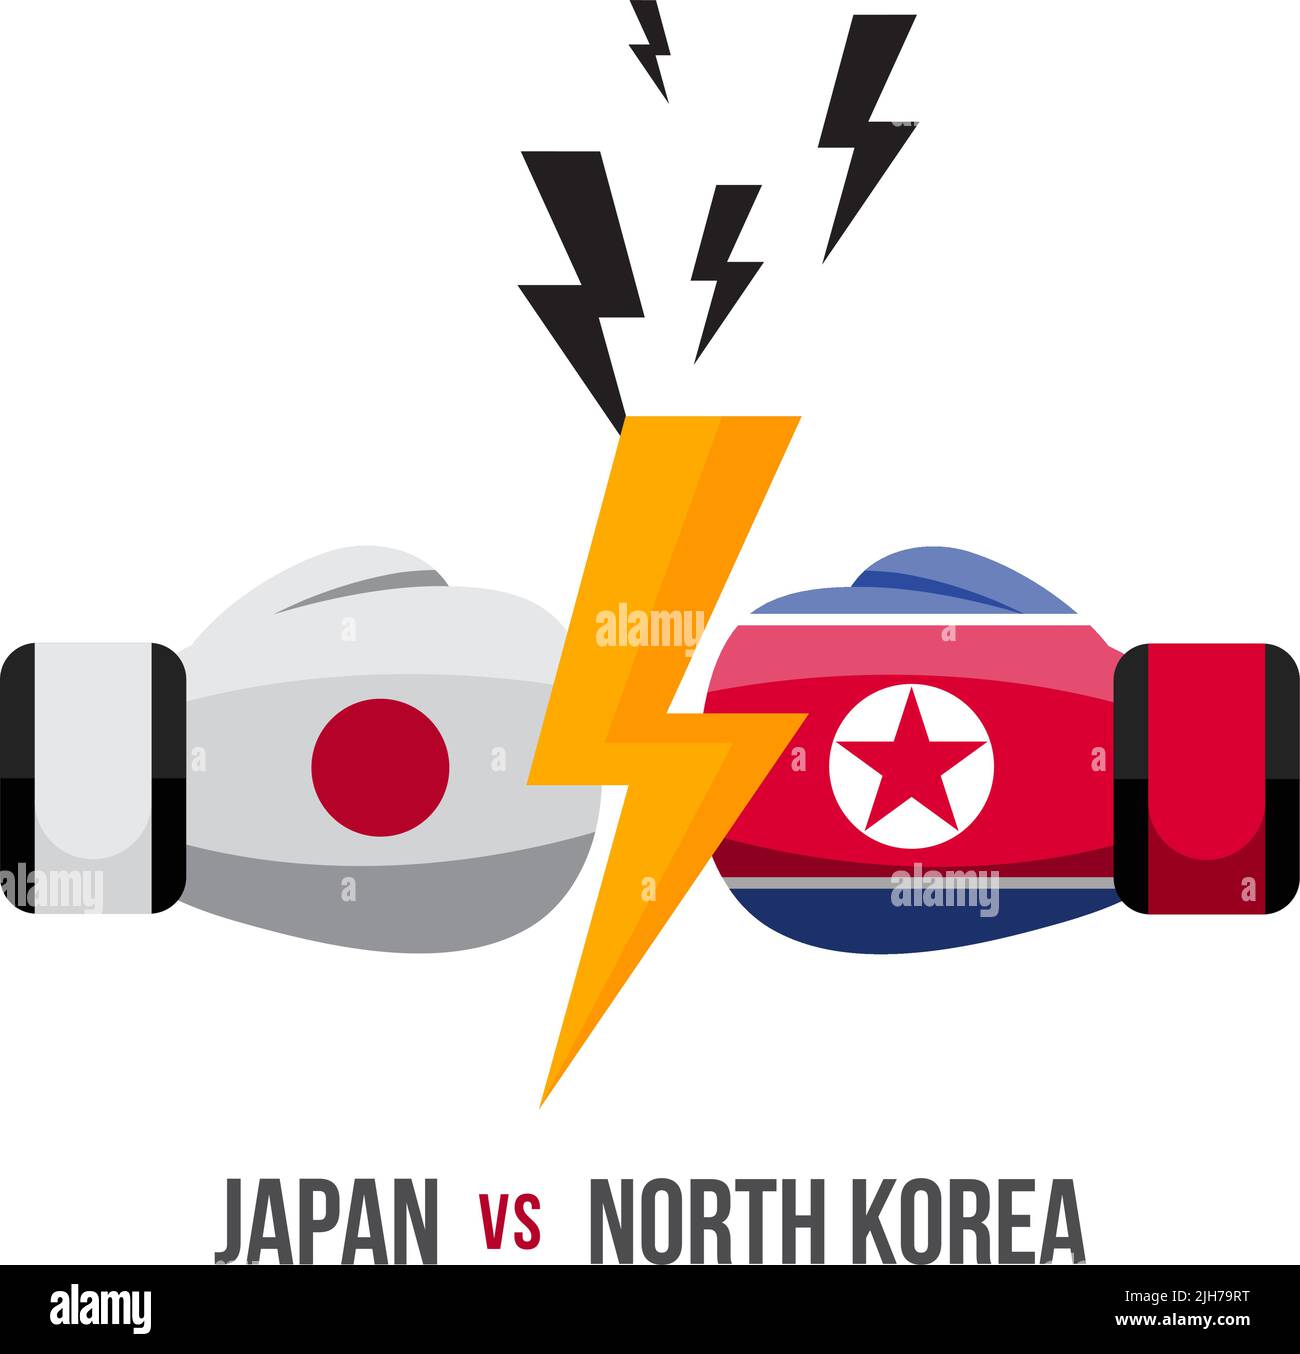 Japan vs North Korea. Concept of sports match, trade war, fight or war on border between japan and north korea. Vector illustration. Stock Vector